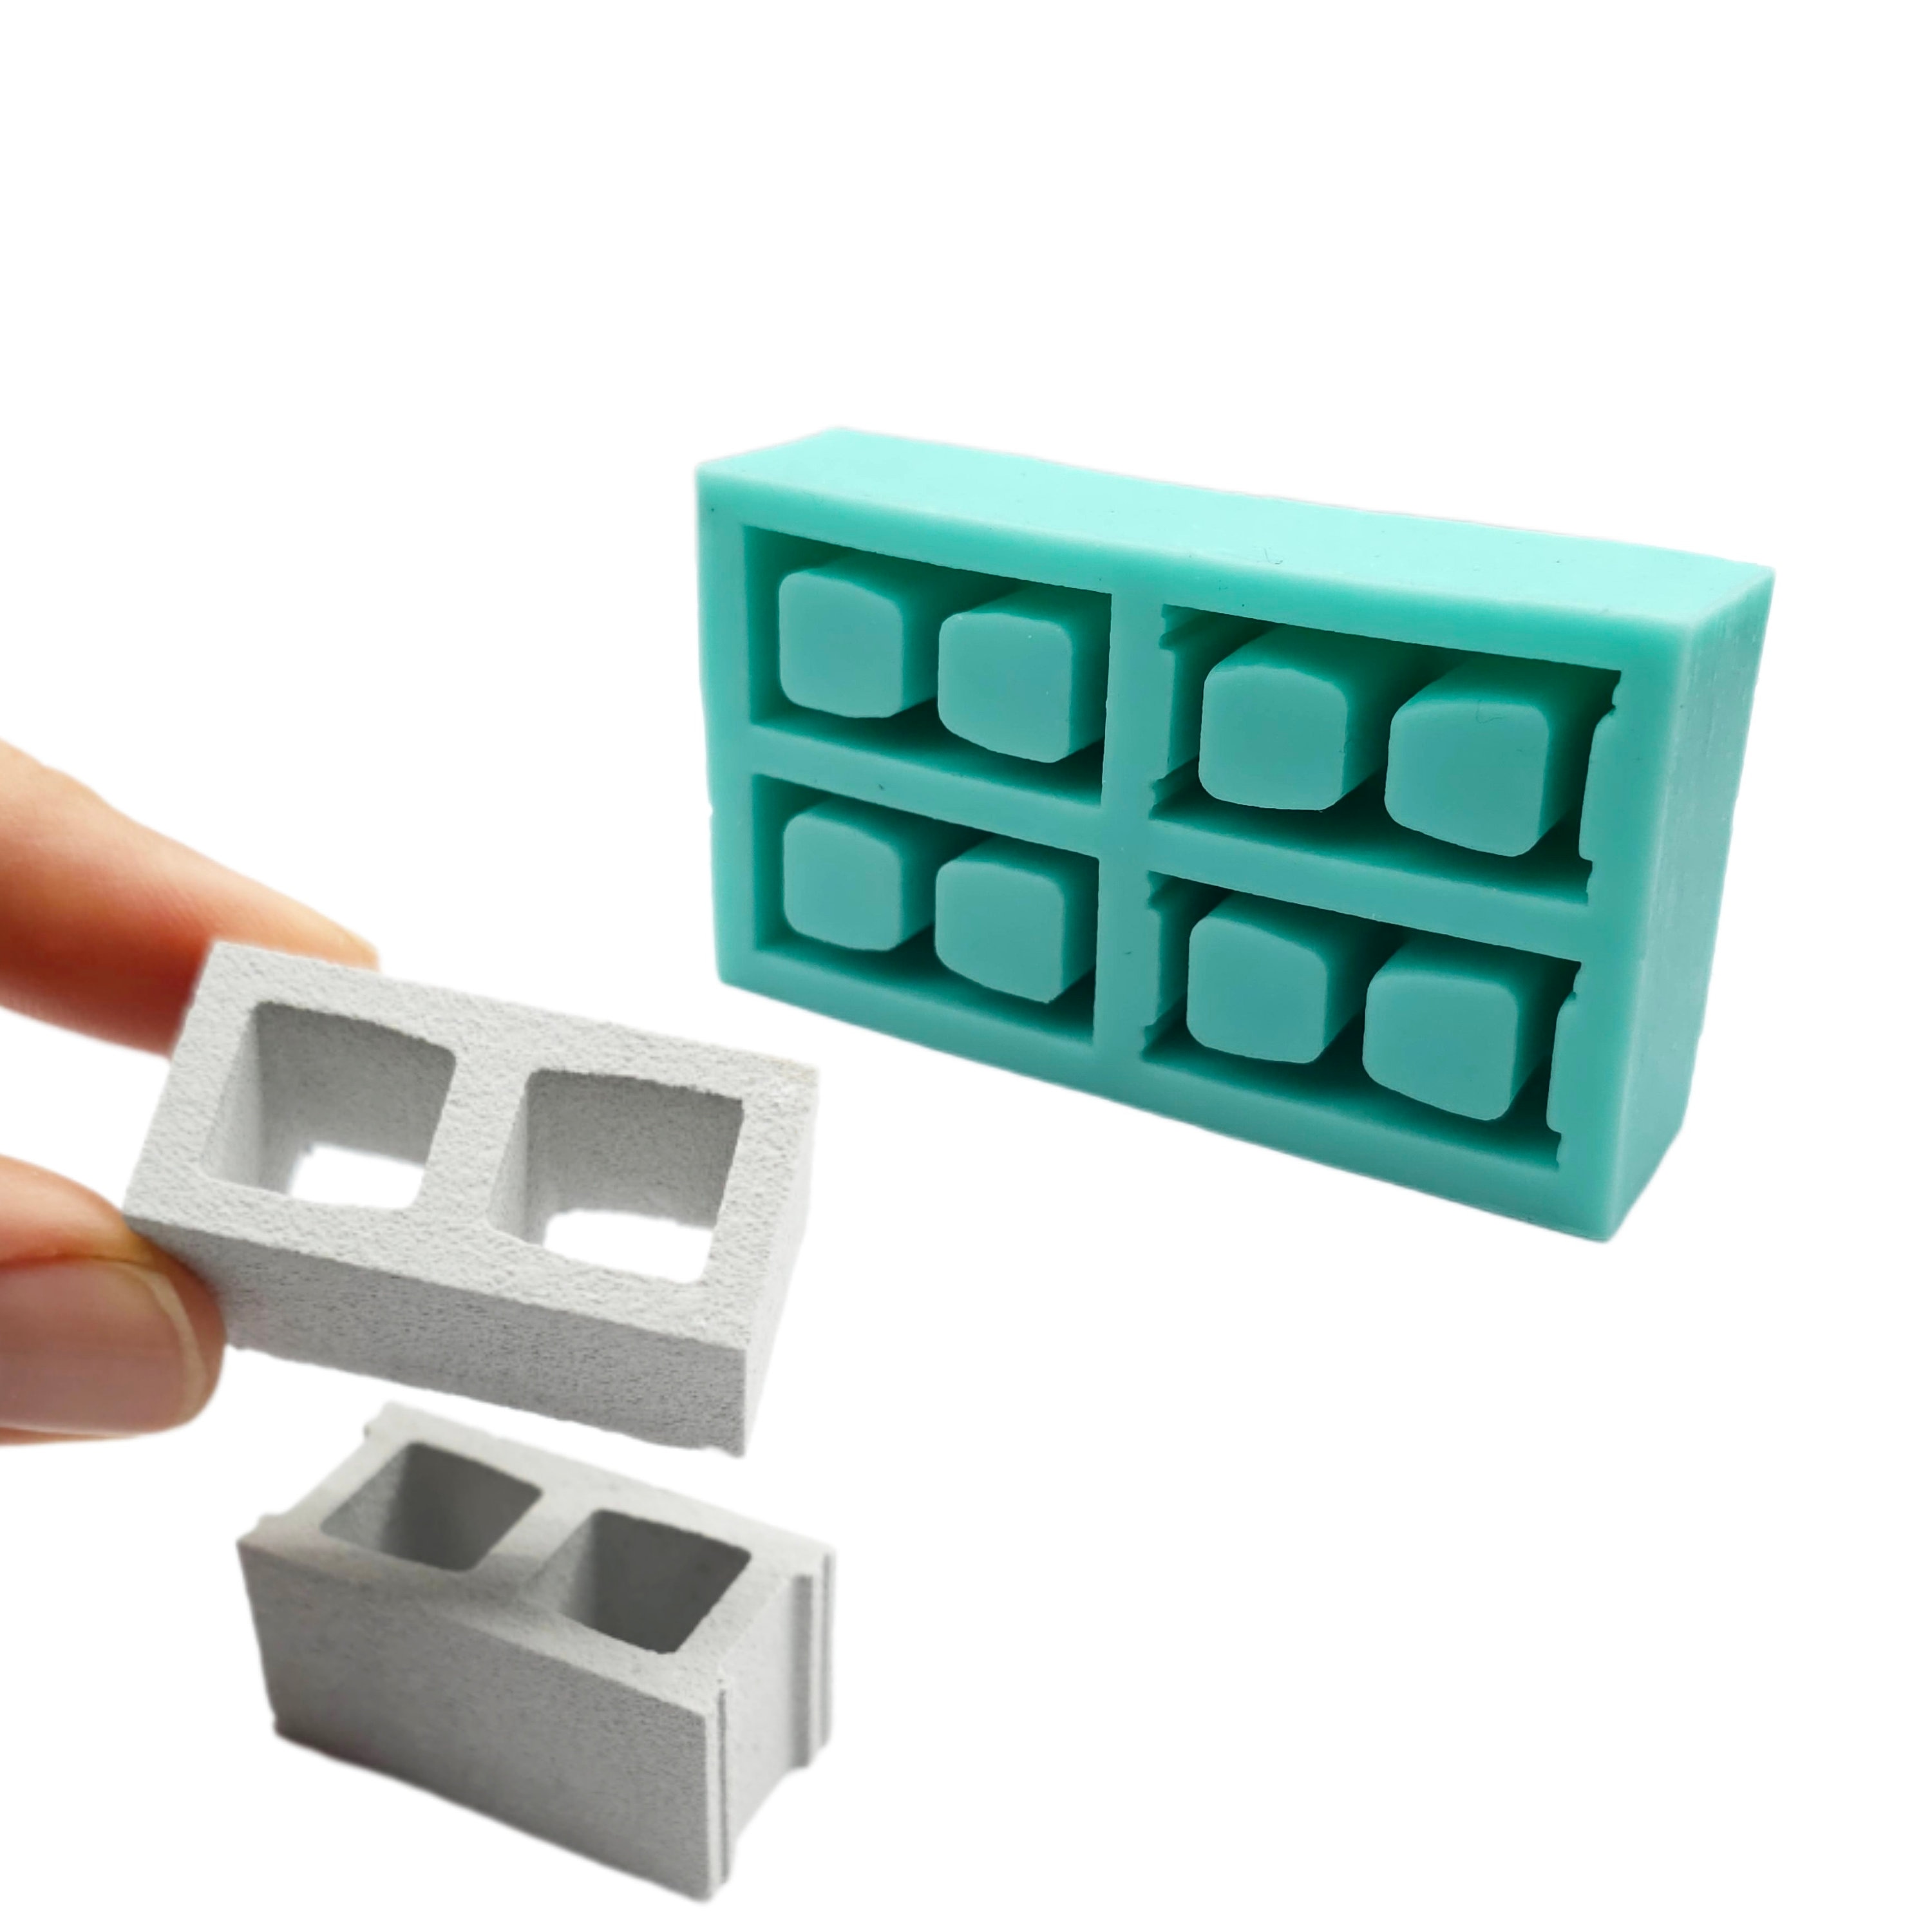 1:12 Scale Mini Half Cinder Blocks (15pk)